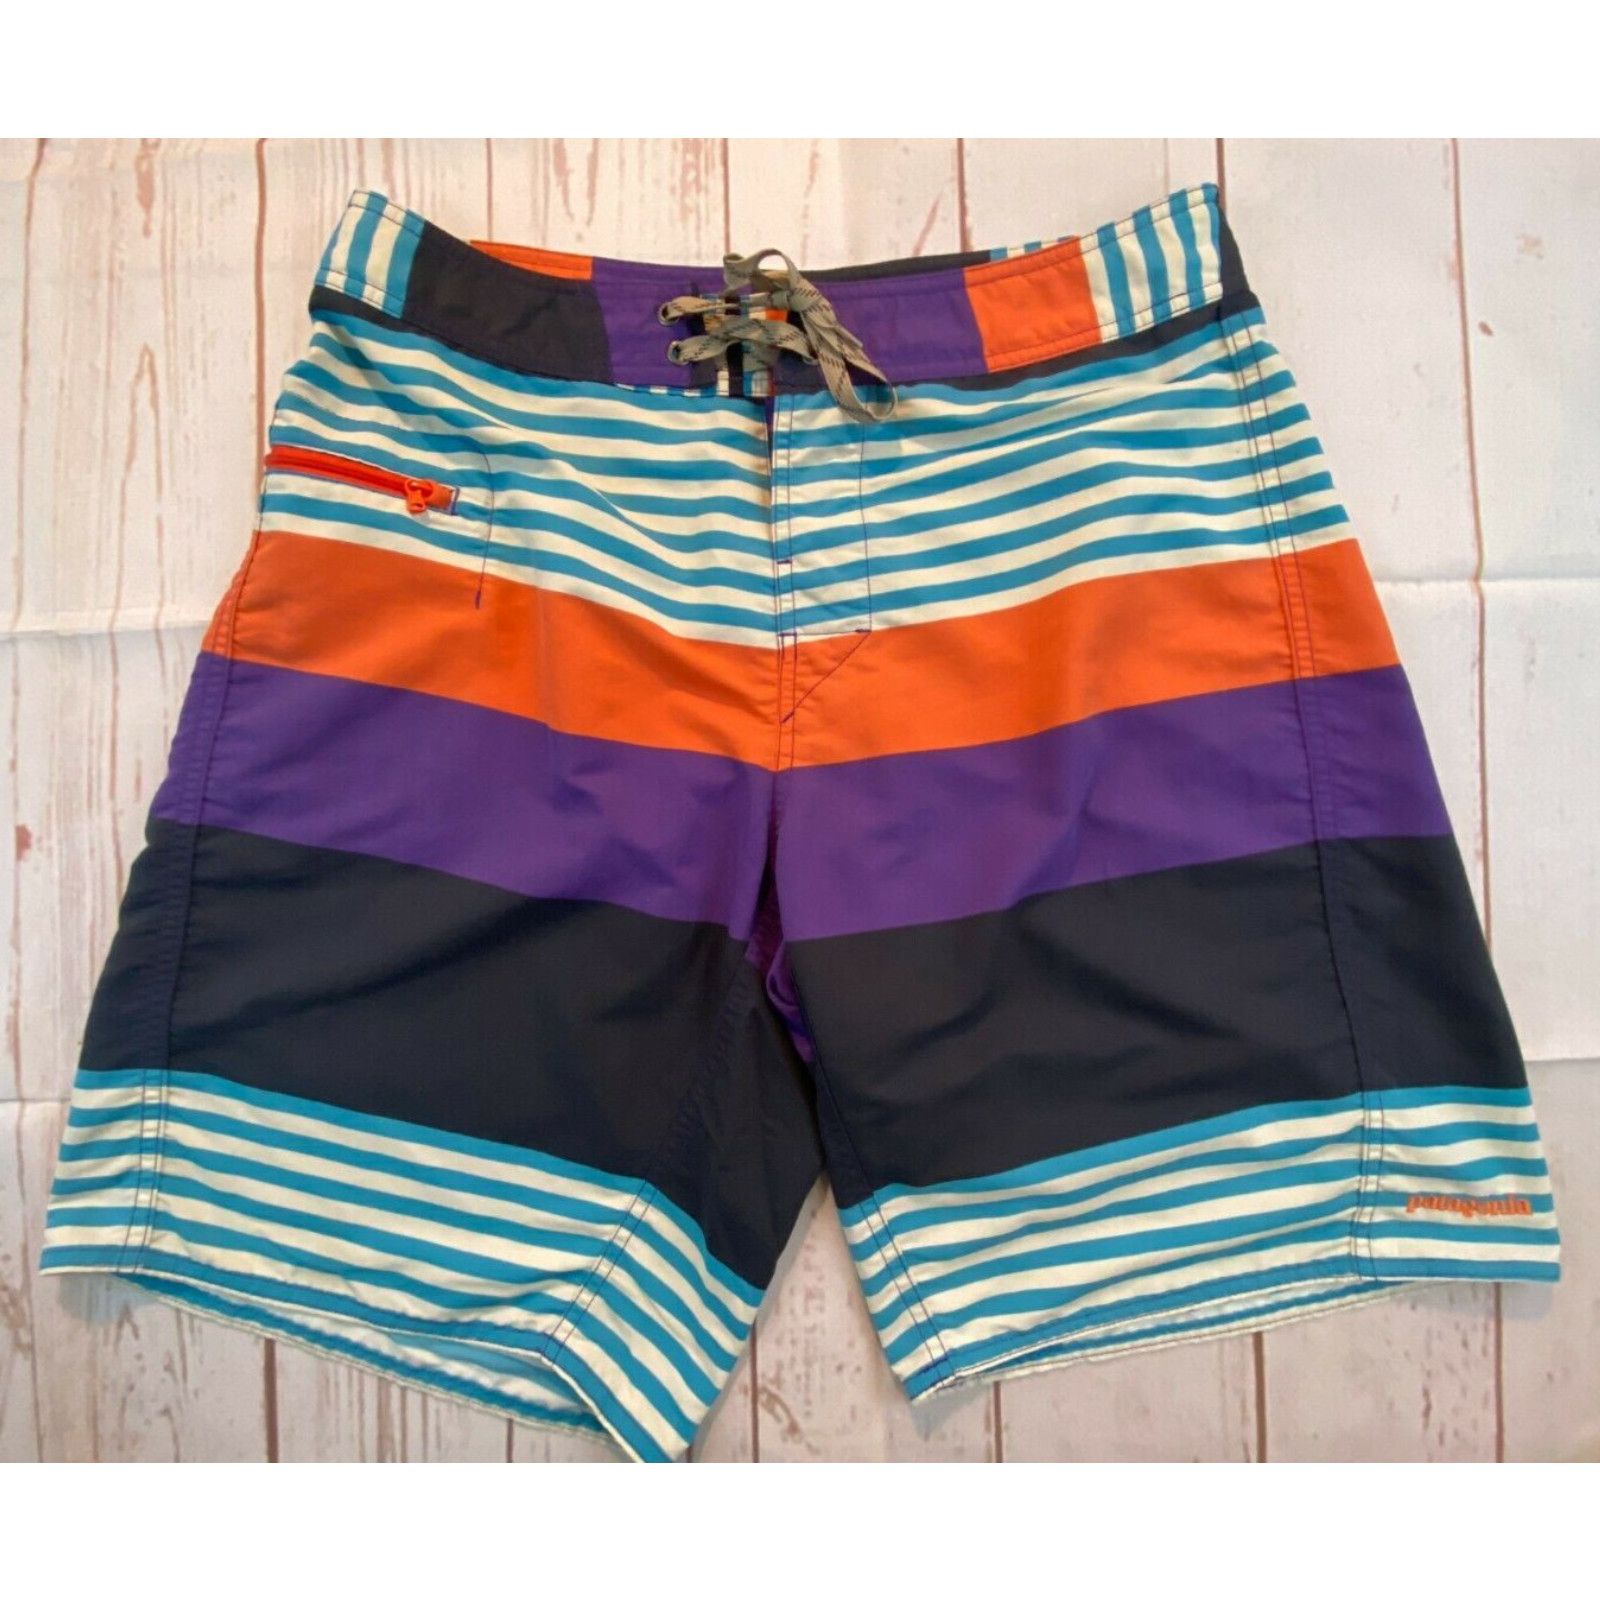 Patagonia Patagonia Mens Boys Board shorts Swimsuit trunks Size 32 muti ...